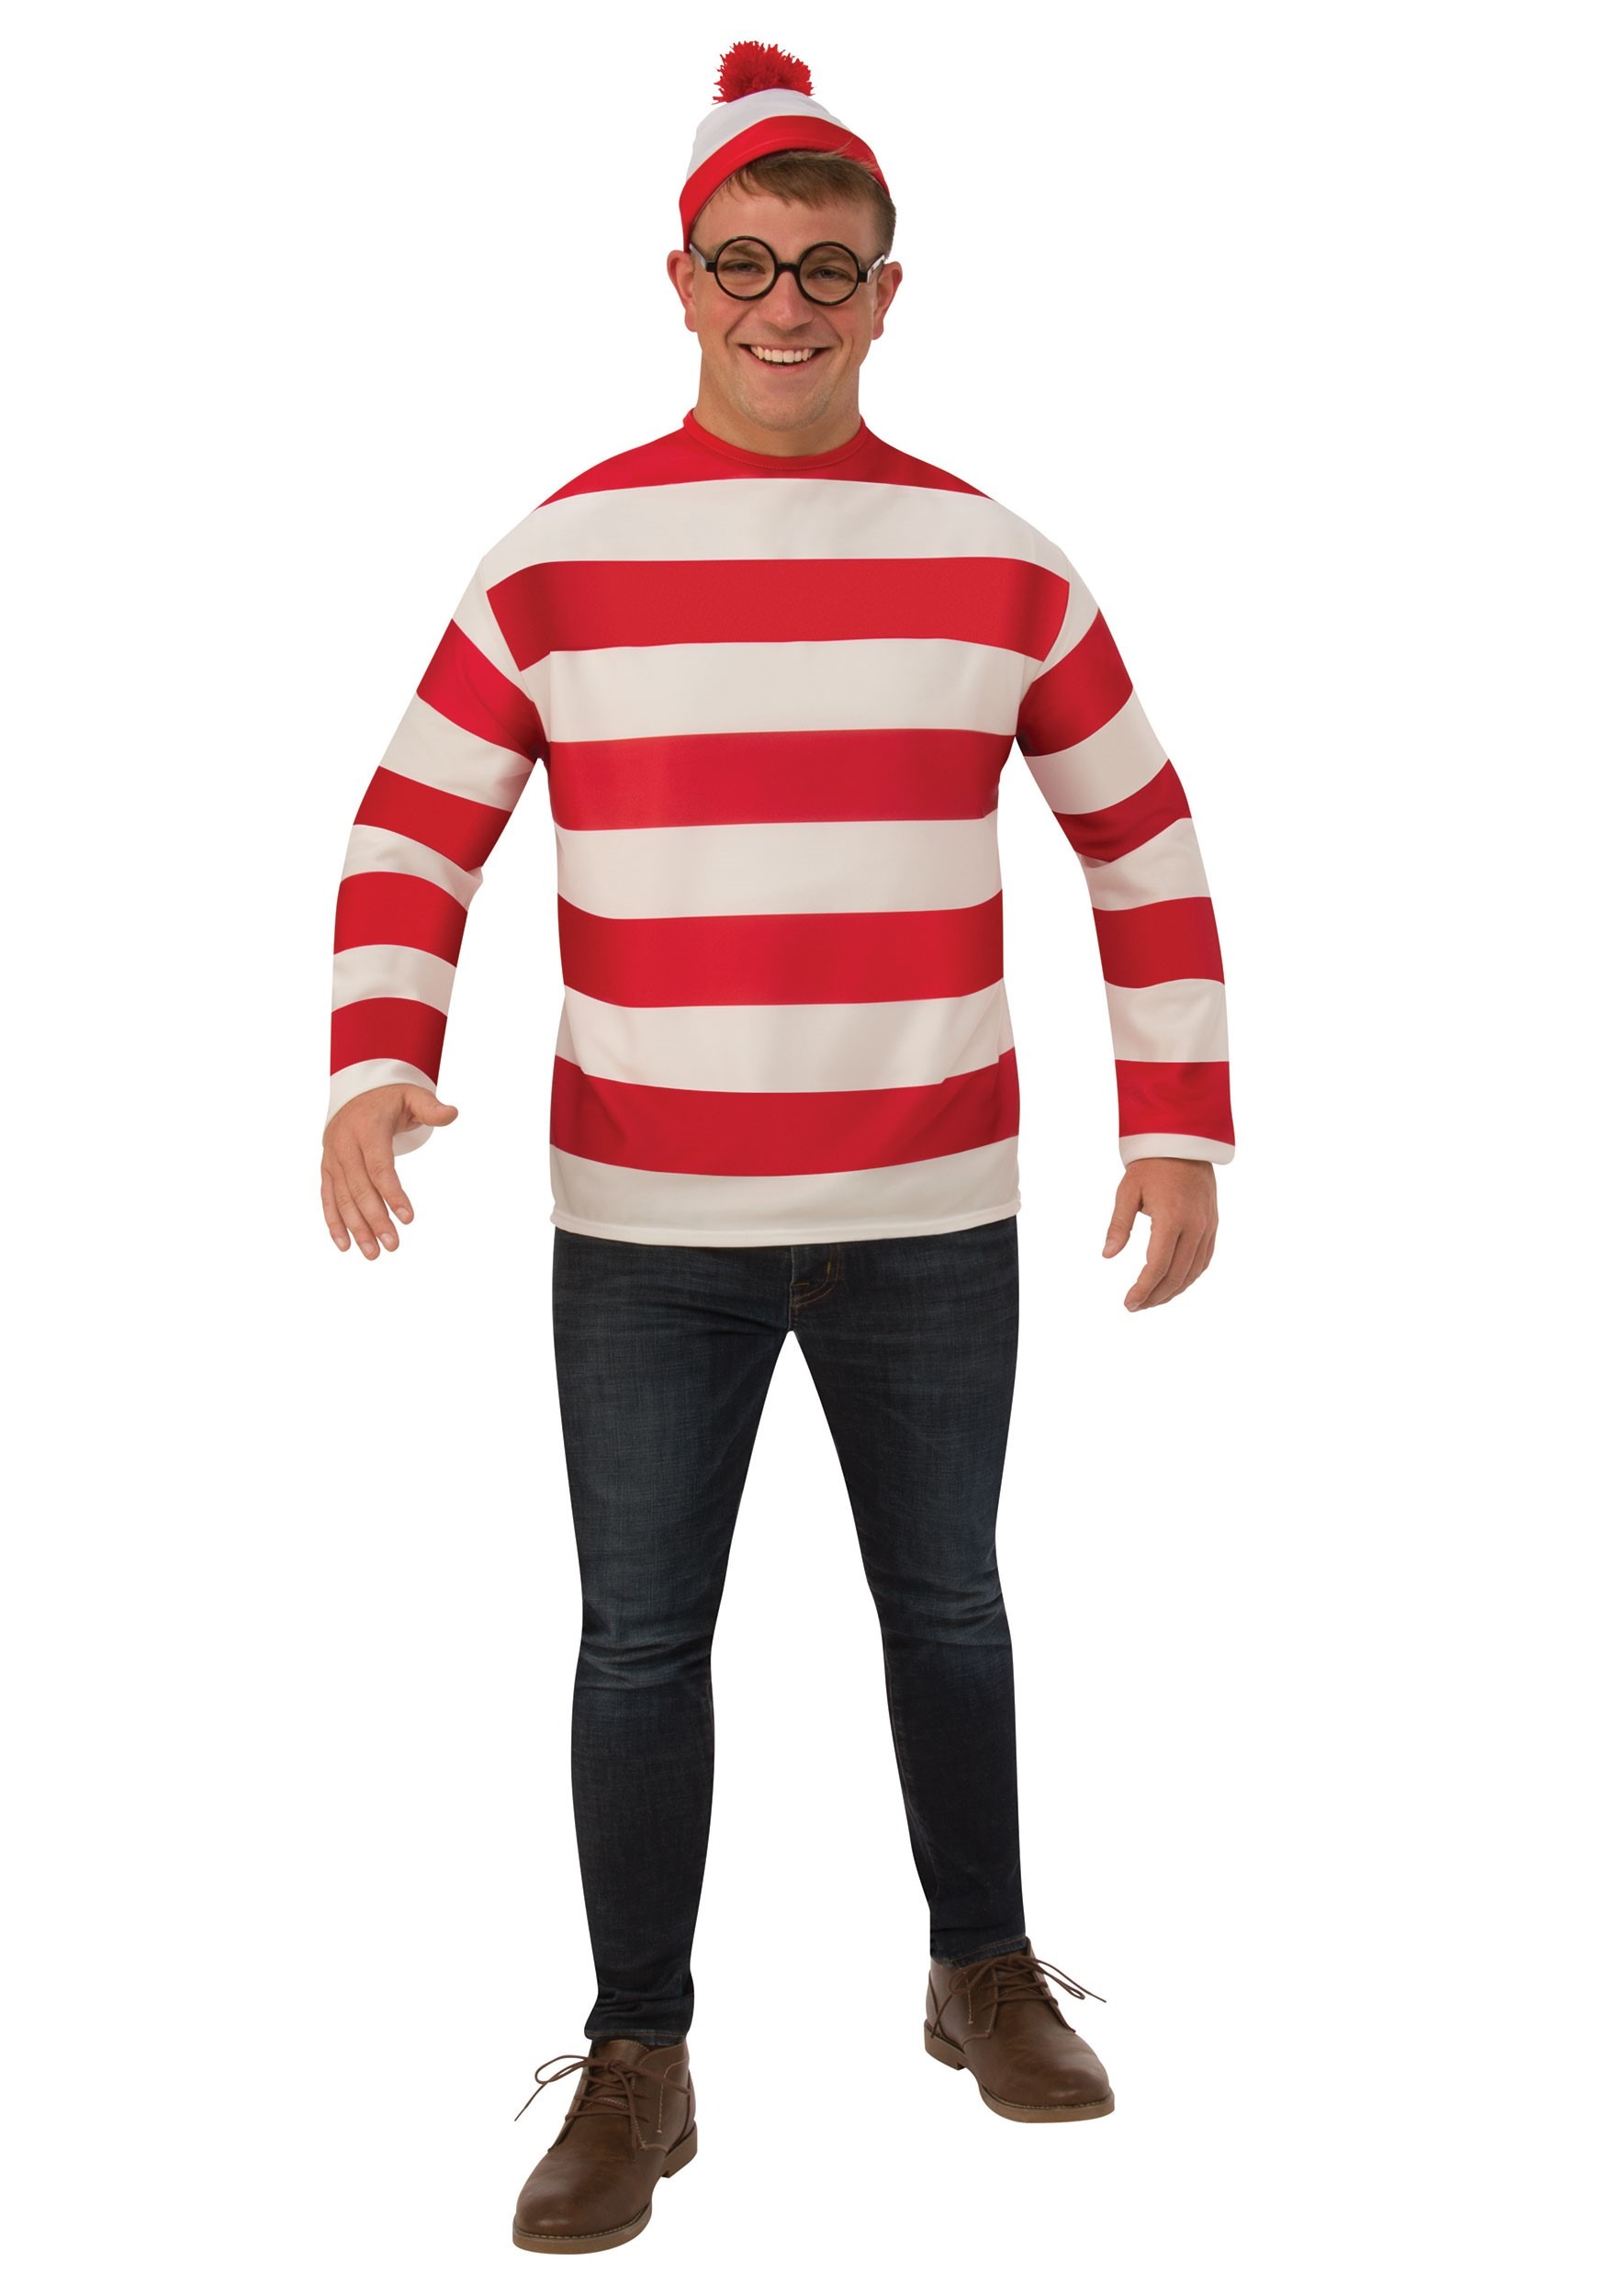 Where’s Waldo: Plus Size Adult Costume